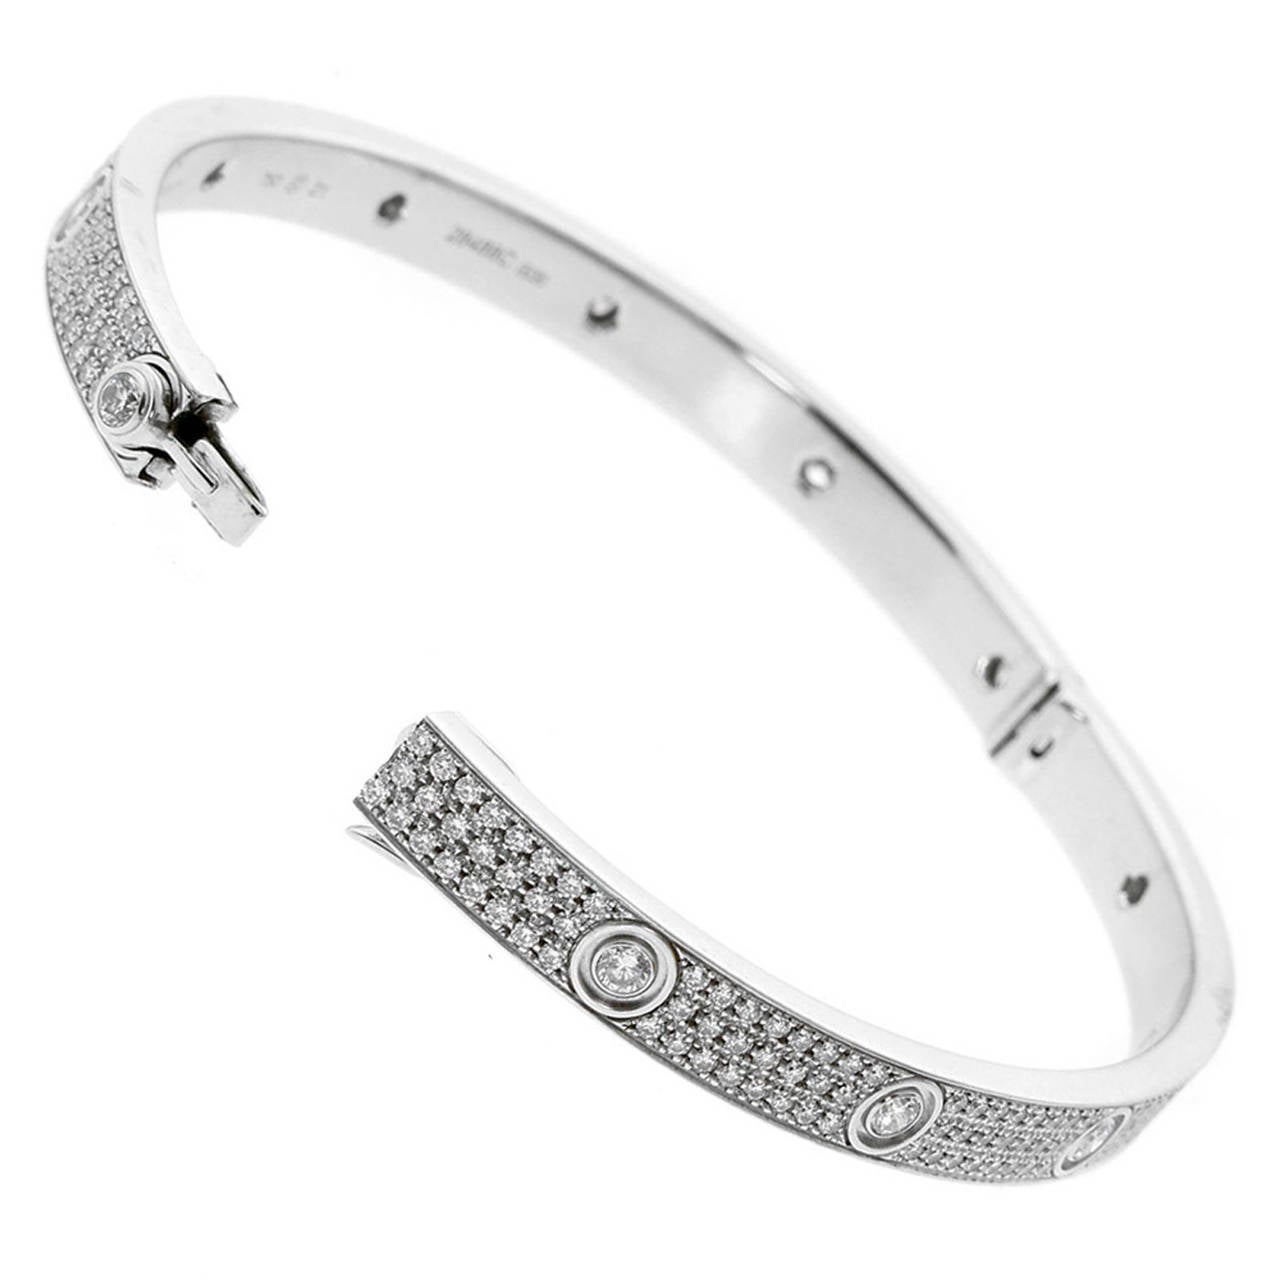  Cartier  Diamond  Gold Love Bangle bracelet  For Sale at 1stdibs